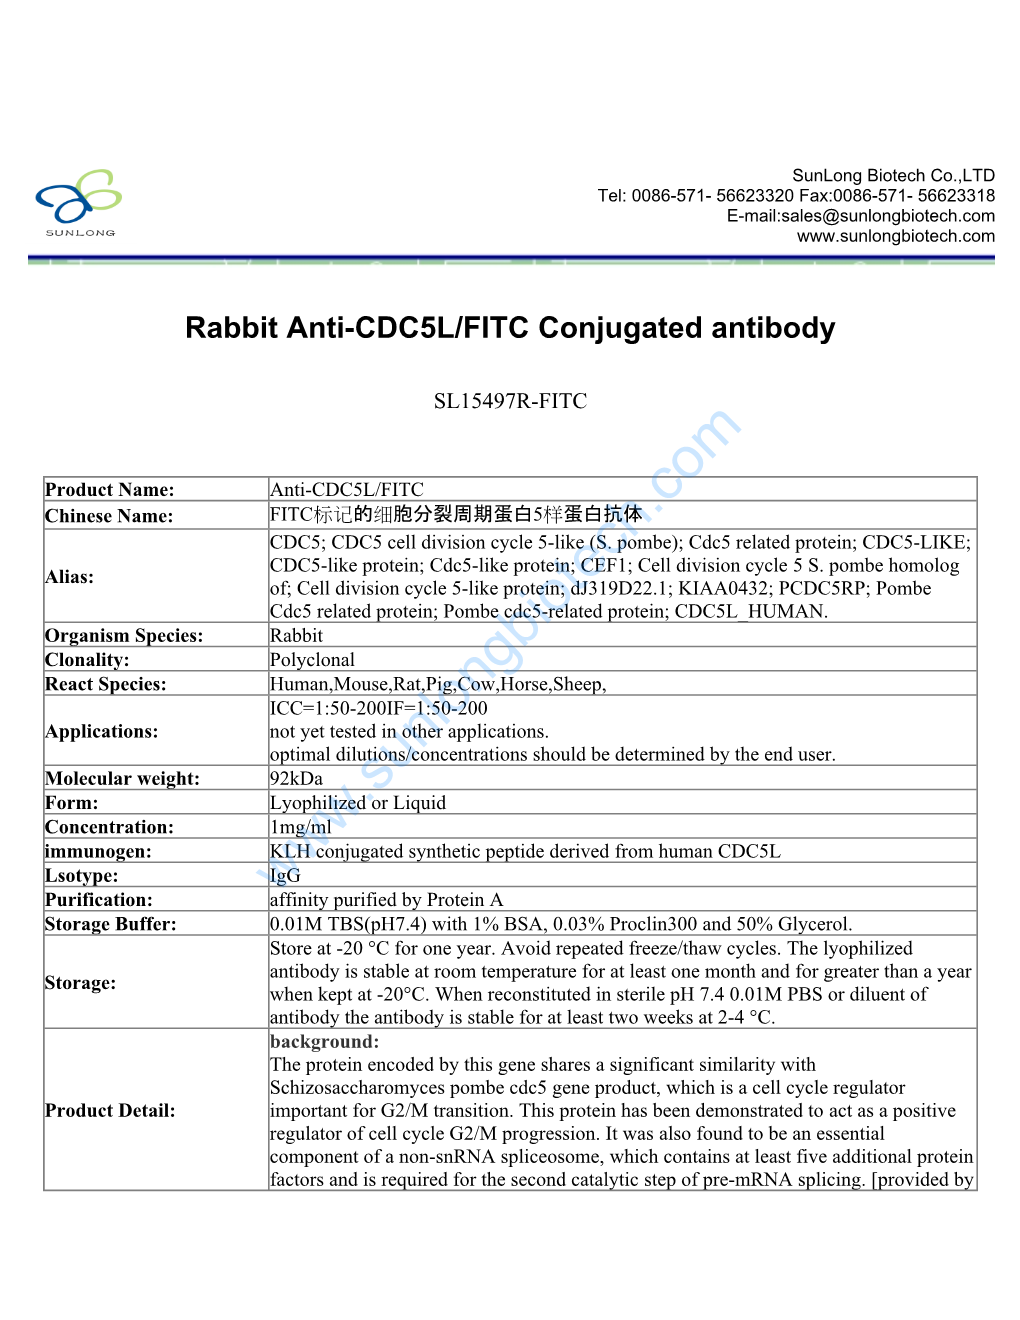 Rabbit Anti-CDC5L/FITC Conjugated Antibody-SL15497R-FITC